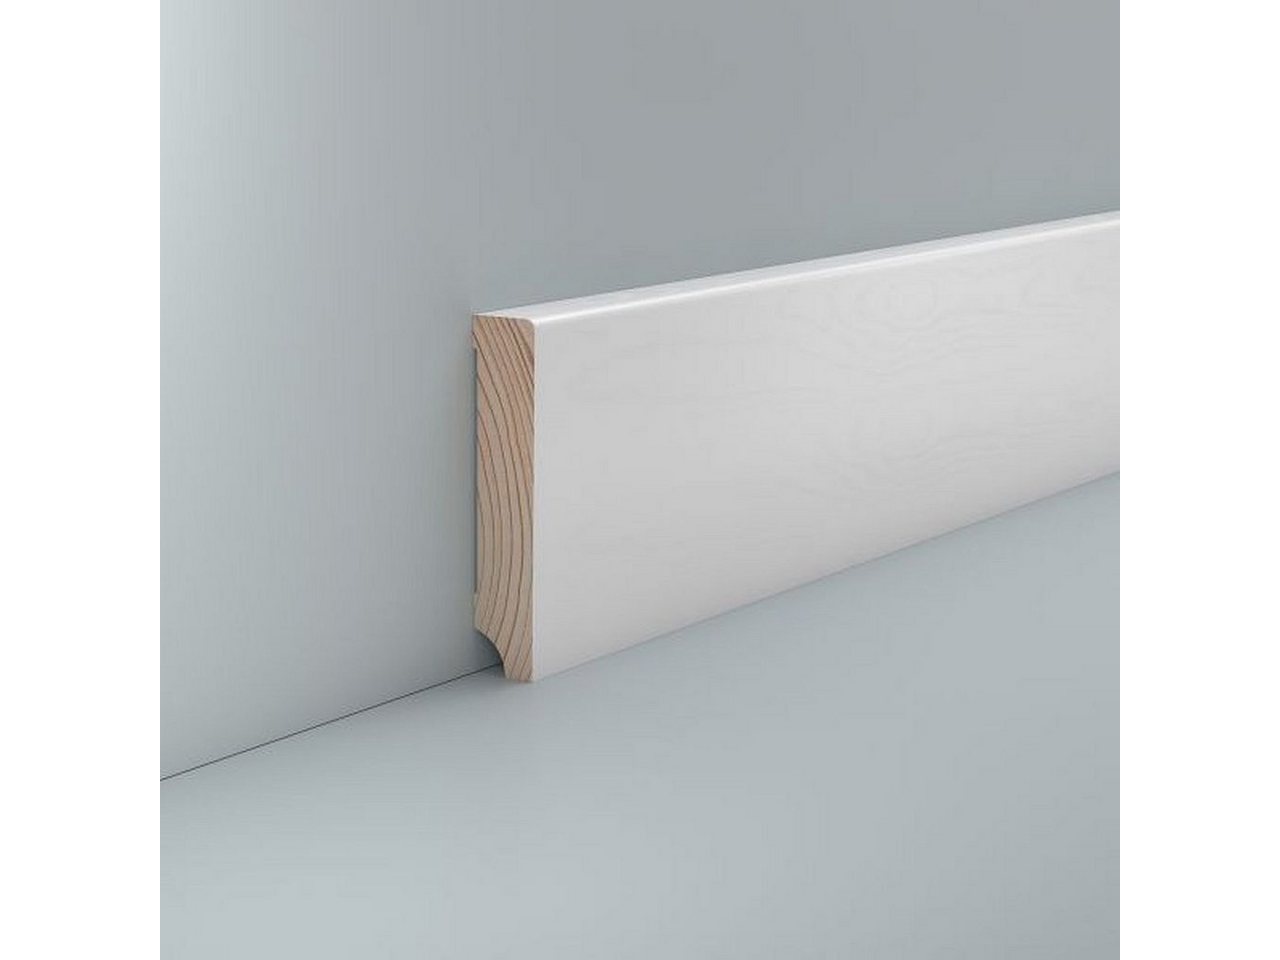 Südbrock Sockelleiste Sockelleiste weiß Holz 16x80 Kiefer lackiert RAL 9016 Fußleiste, L: 250 cm, H: 8 cm, 1-St. von Südbrock